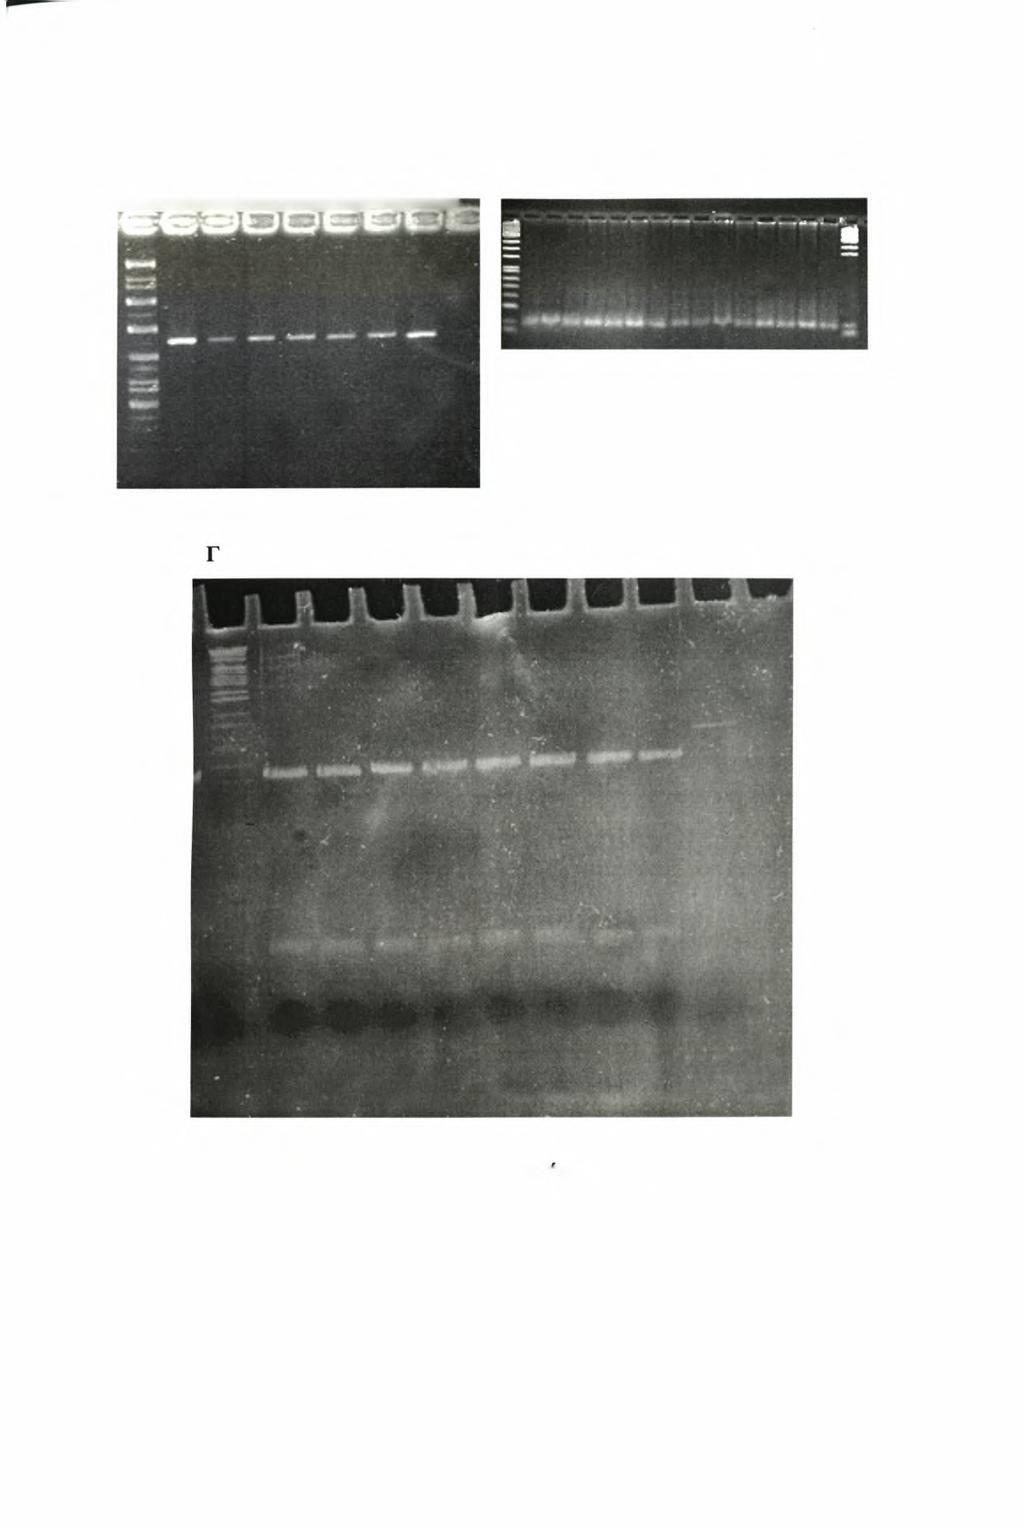 A B nun Εικόνα 4: Επίδραση των περιοριστικών ένζυμων Nialll, Μ60Ι και Sau 961 αντίστοιχα στα PCR